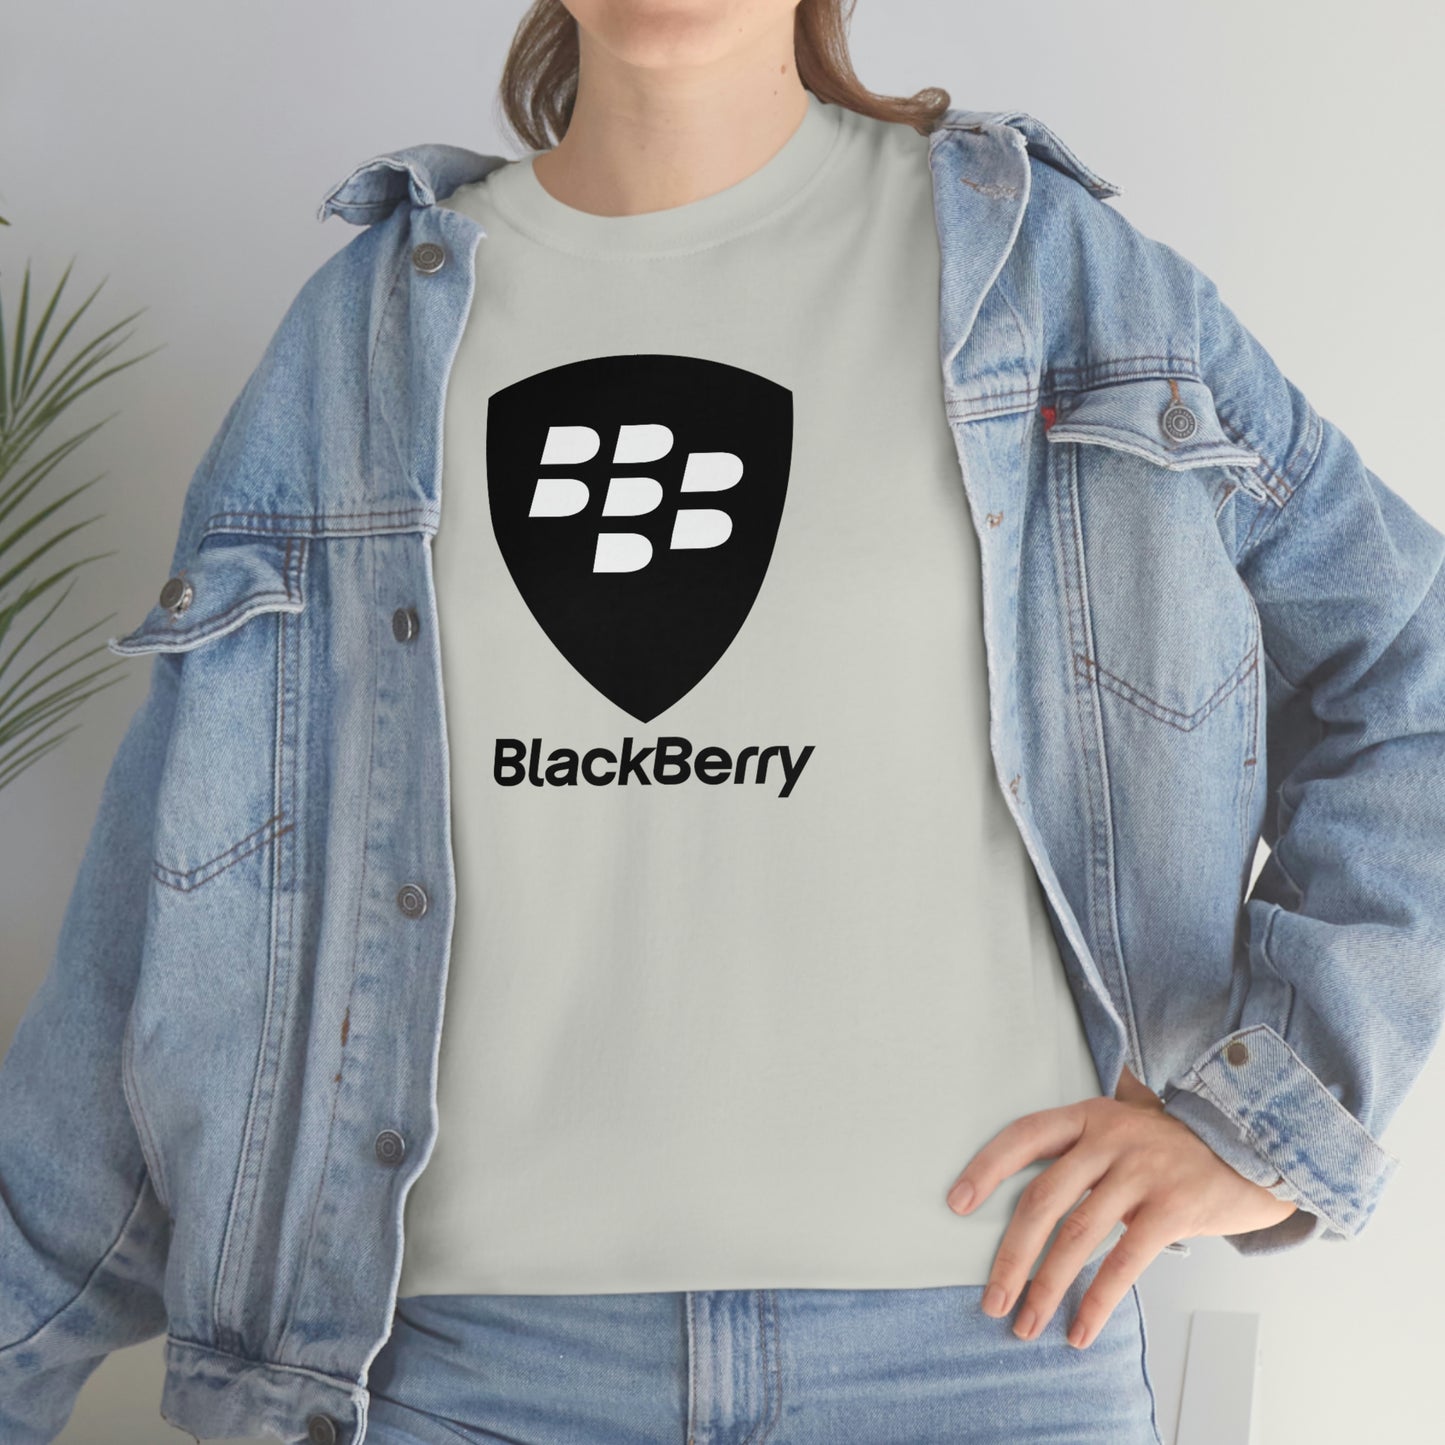 Blackberry T-Shirt